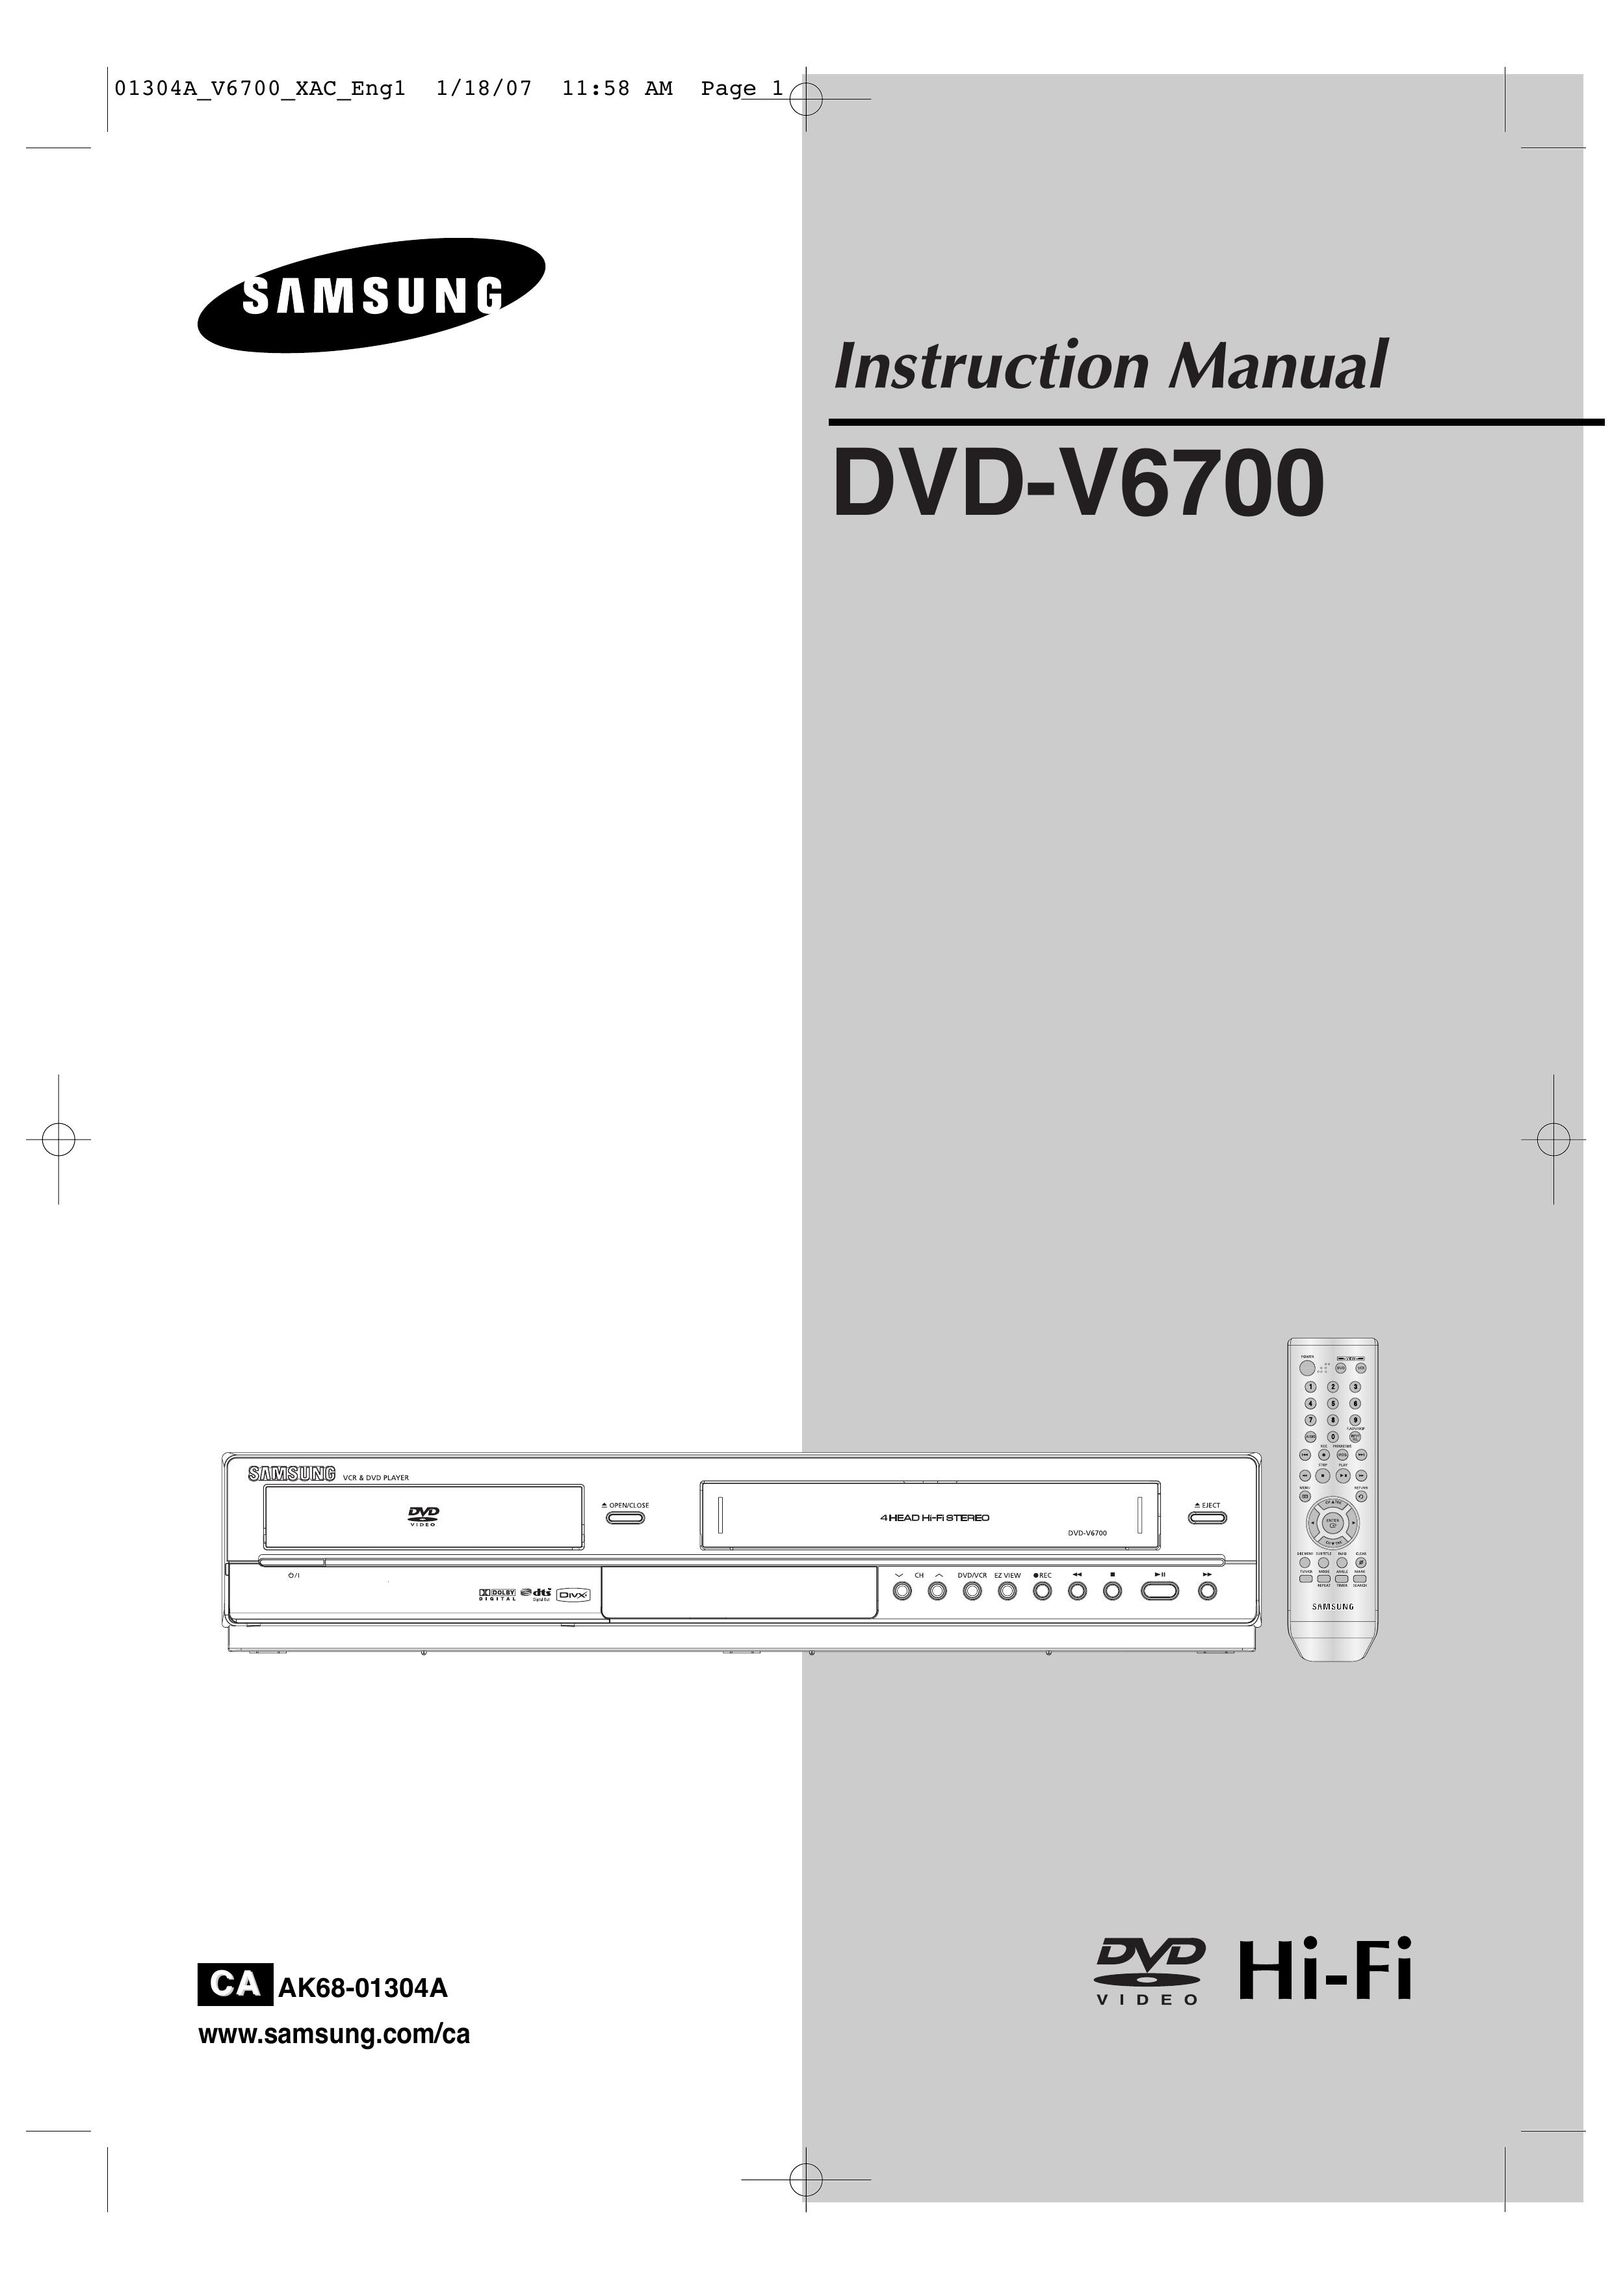 Samsung 01304A DVD Recorder User Manual